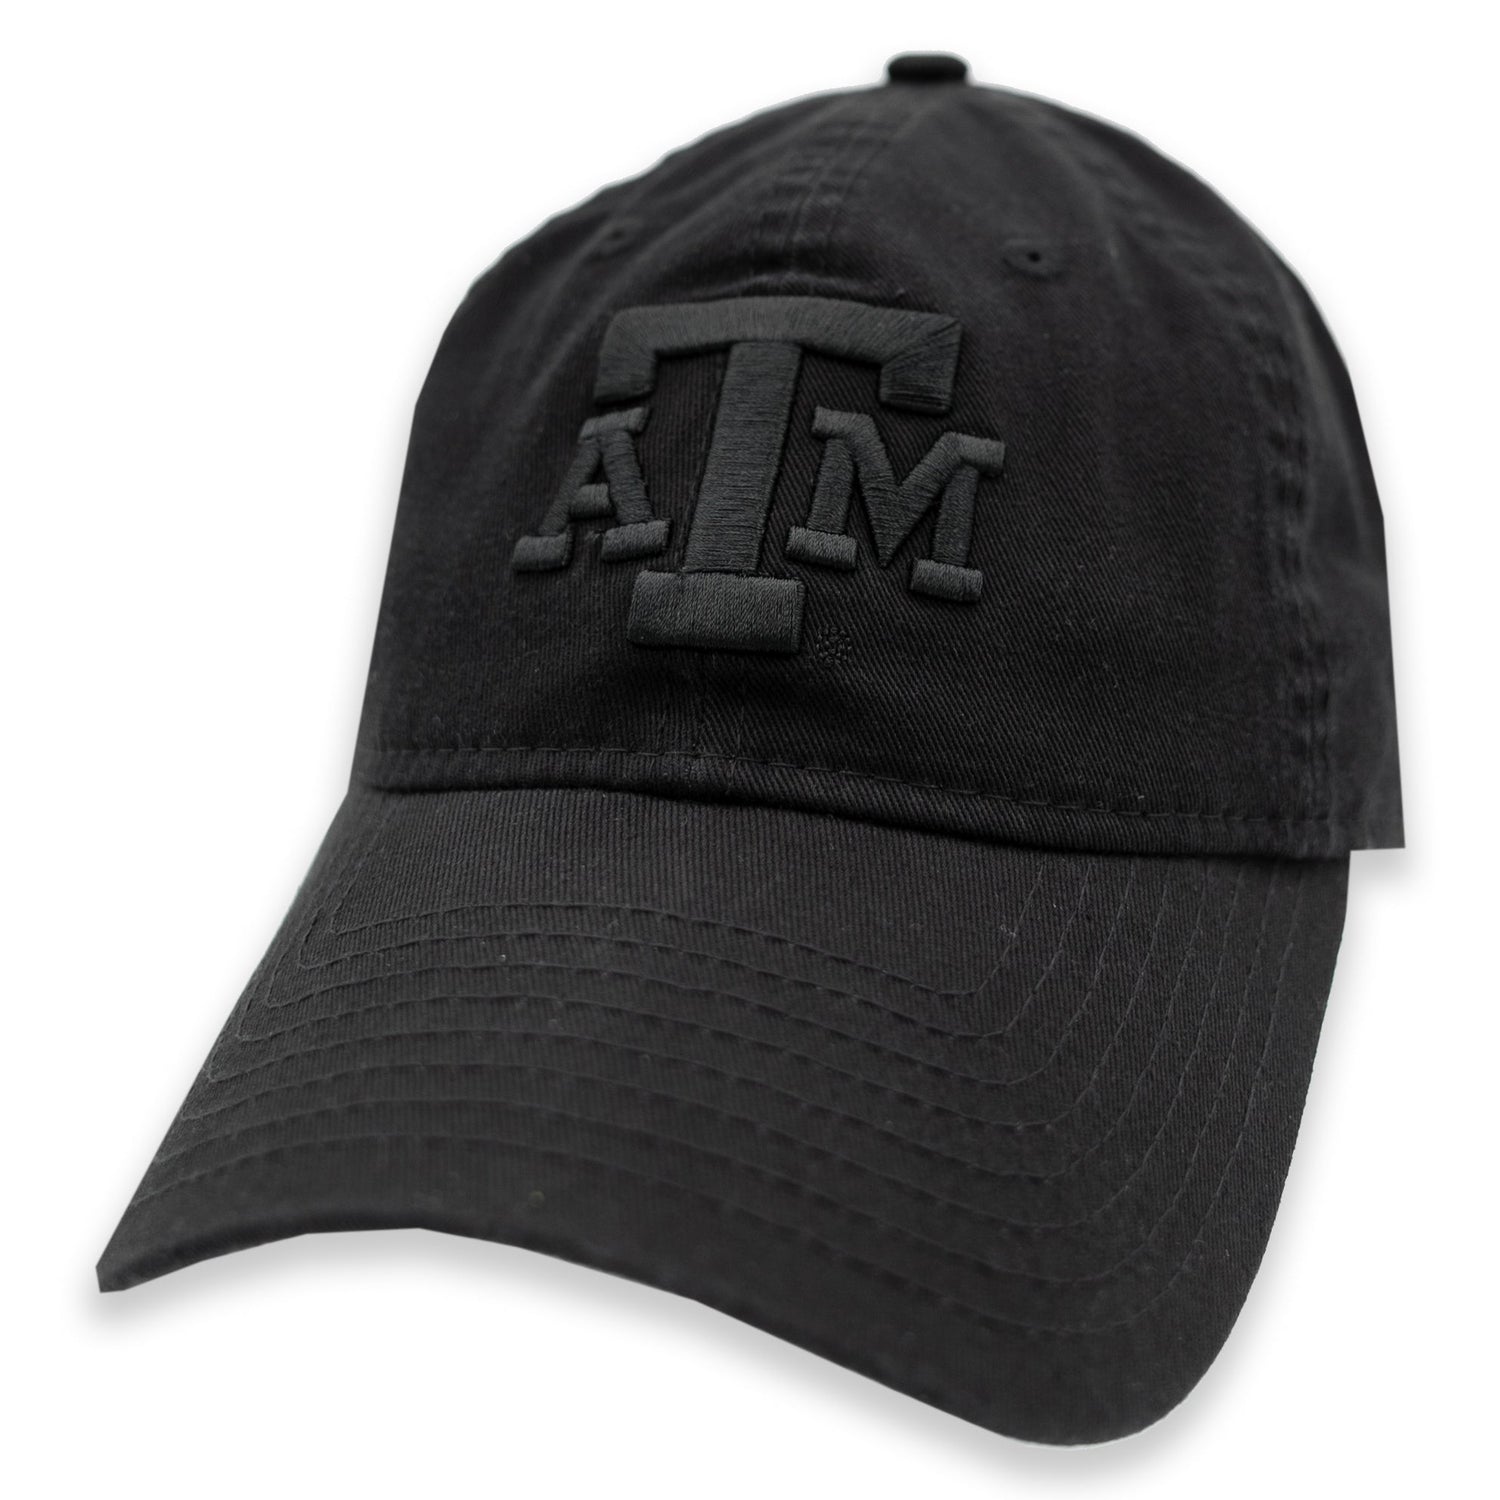 Texas A&M Black On Black Hat